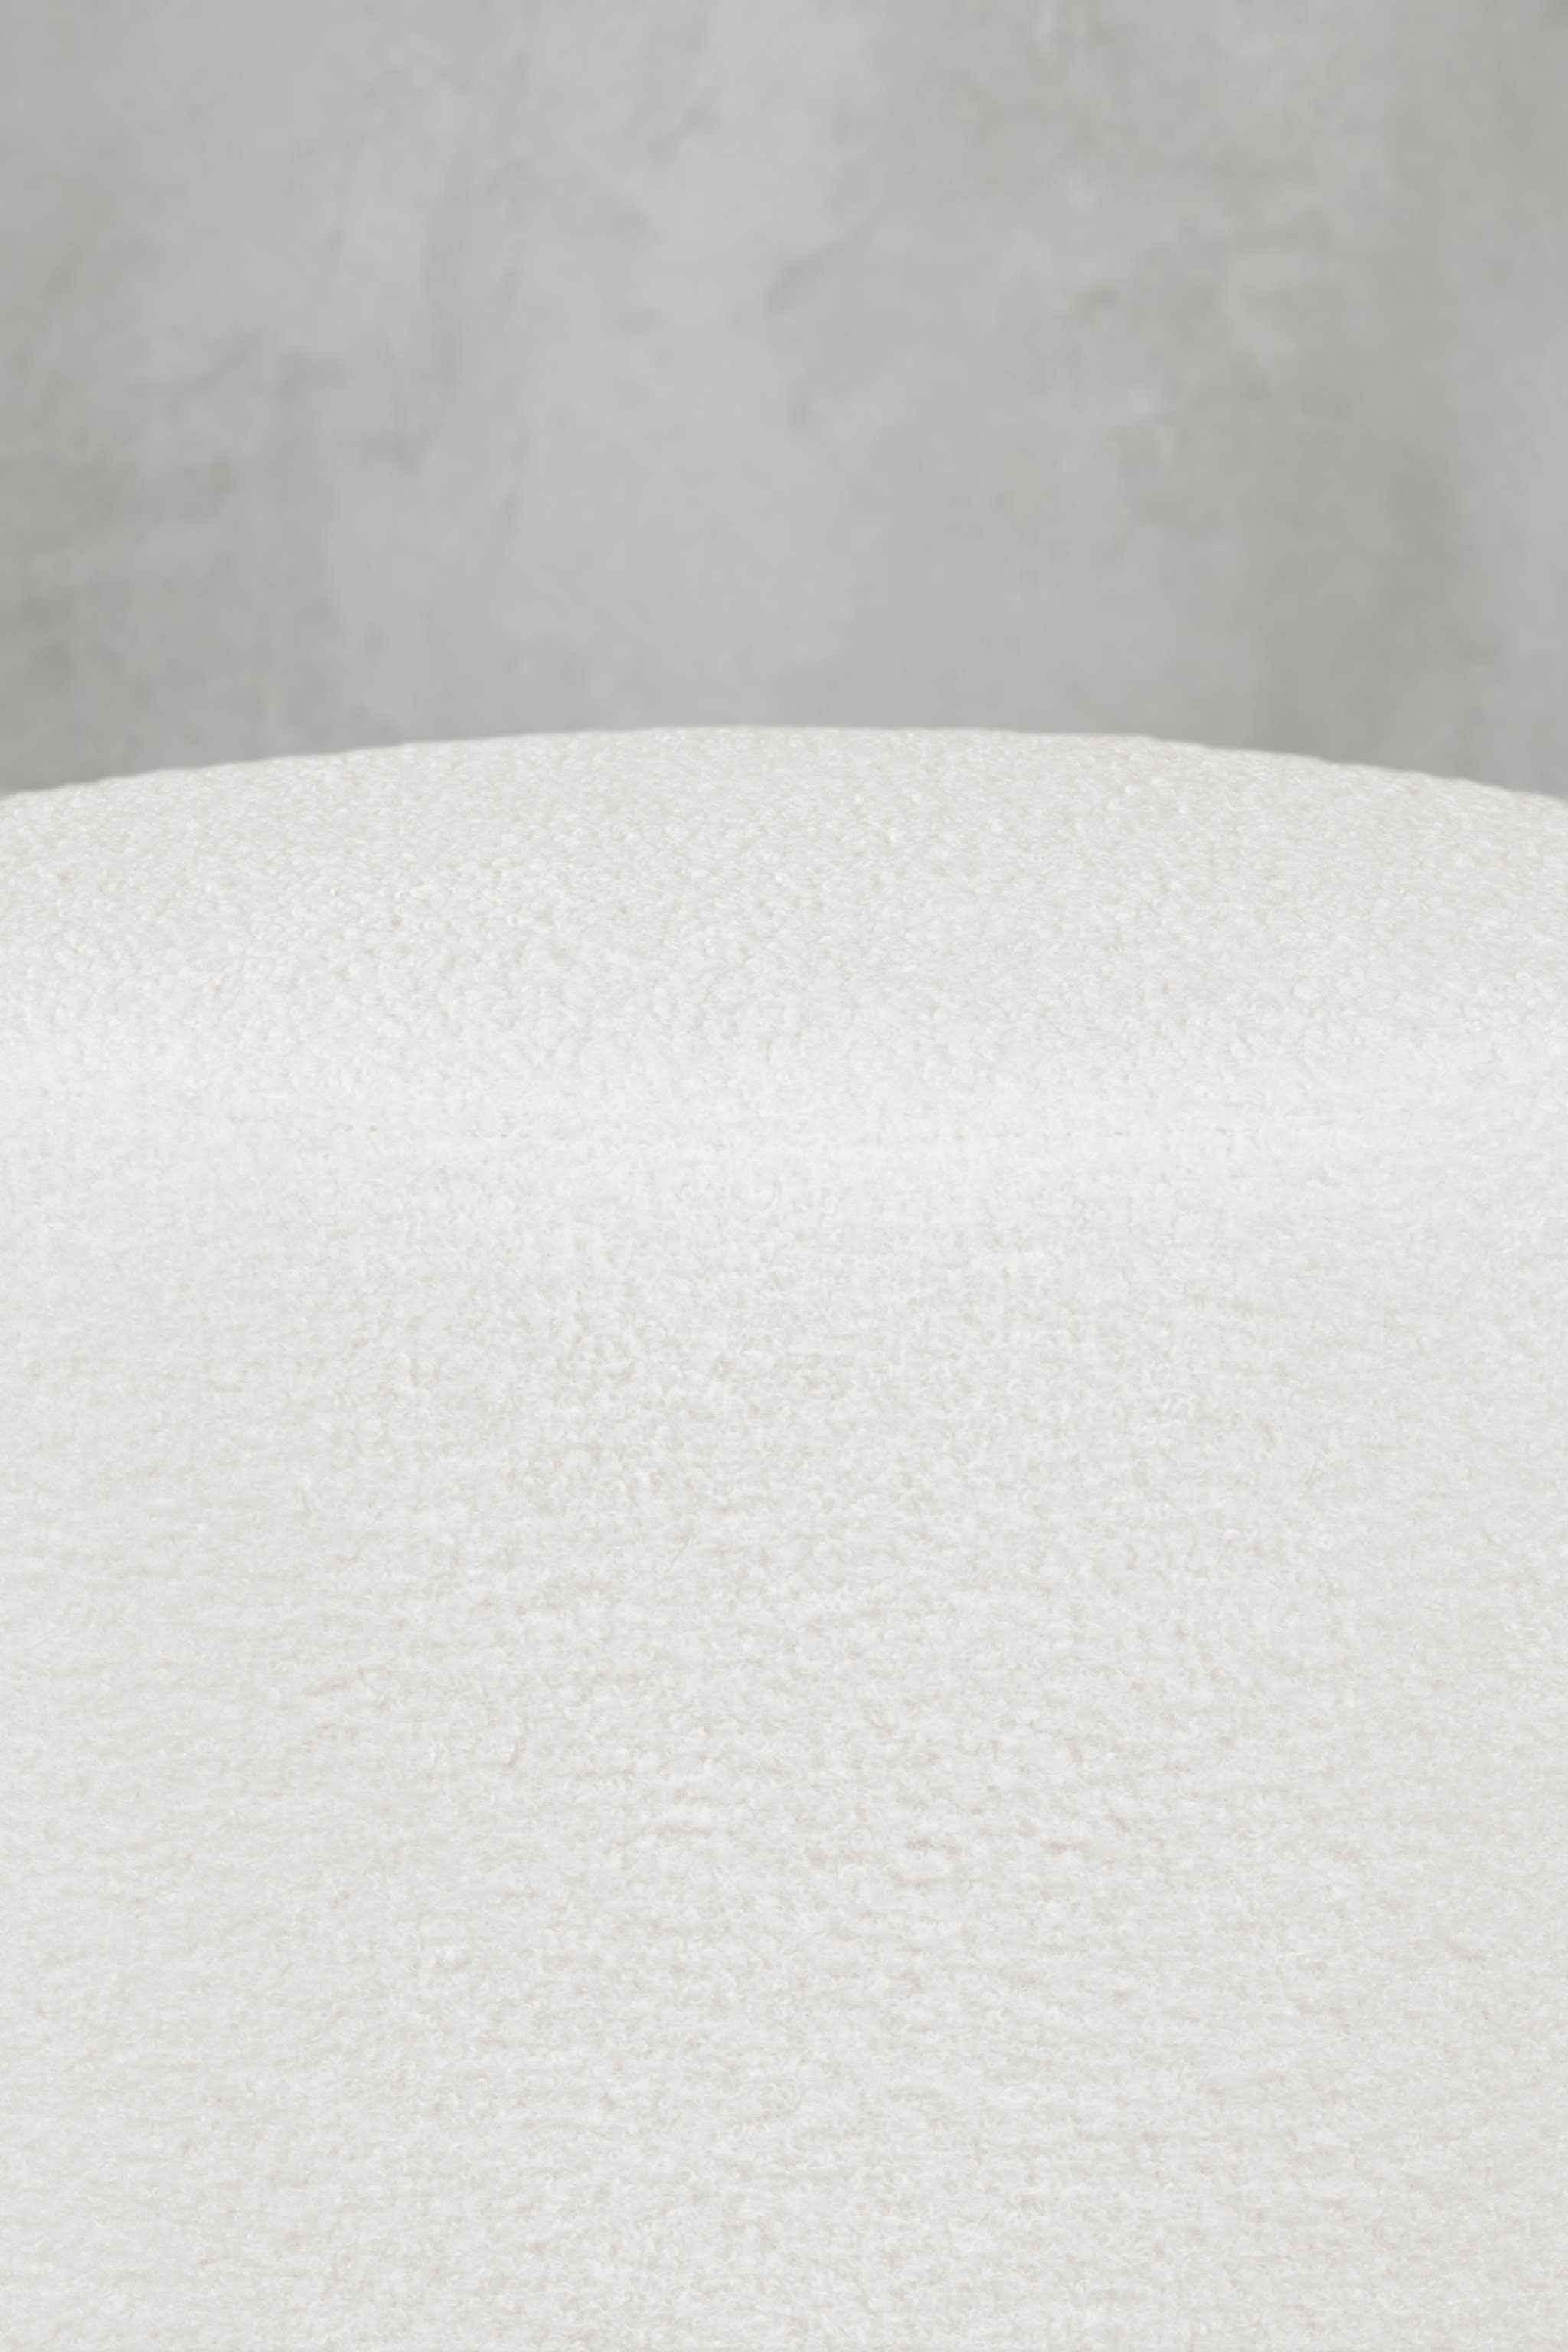 carla&marge Pouf Tirenia (Sitzhocker mit Bouclé-Bezug eleganter (46x45x45cm) in Weiß), White Plüschbezug Snow